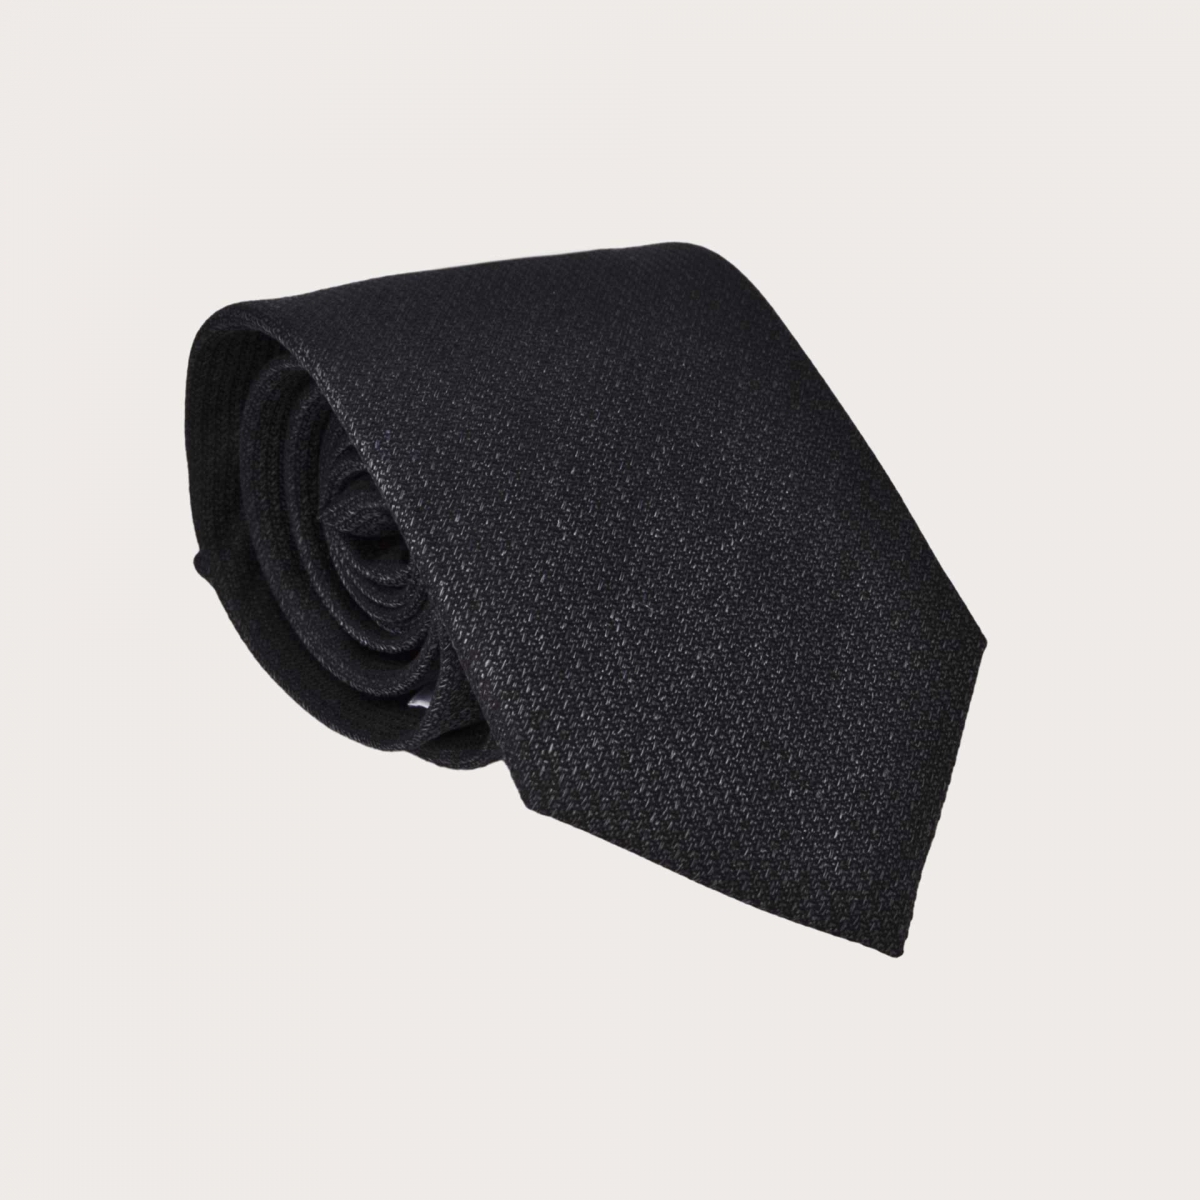 BRUCLE Elegante Krawatte aus melierter schwarzer Seide